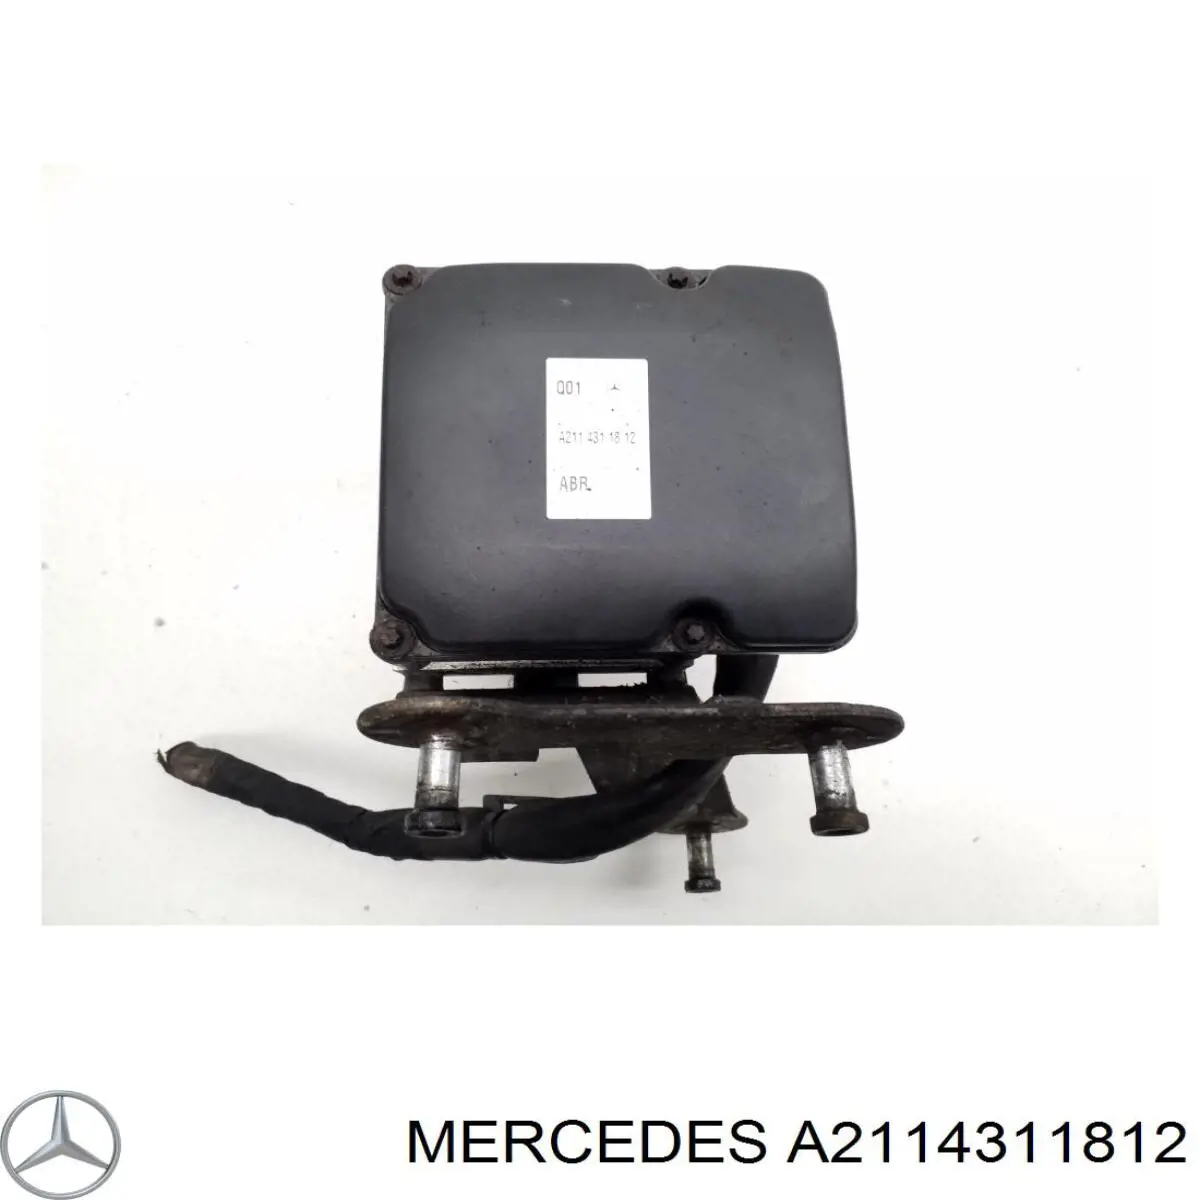 A2114311812 Mercedes